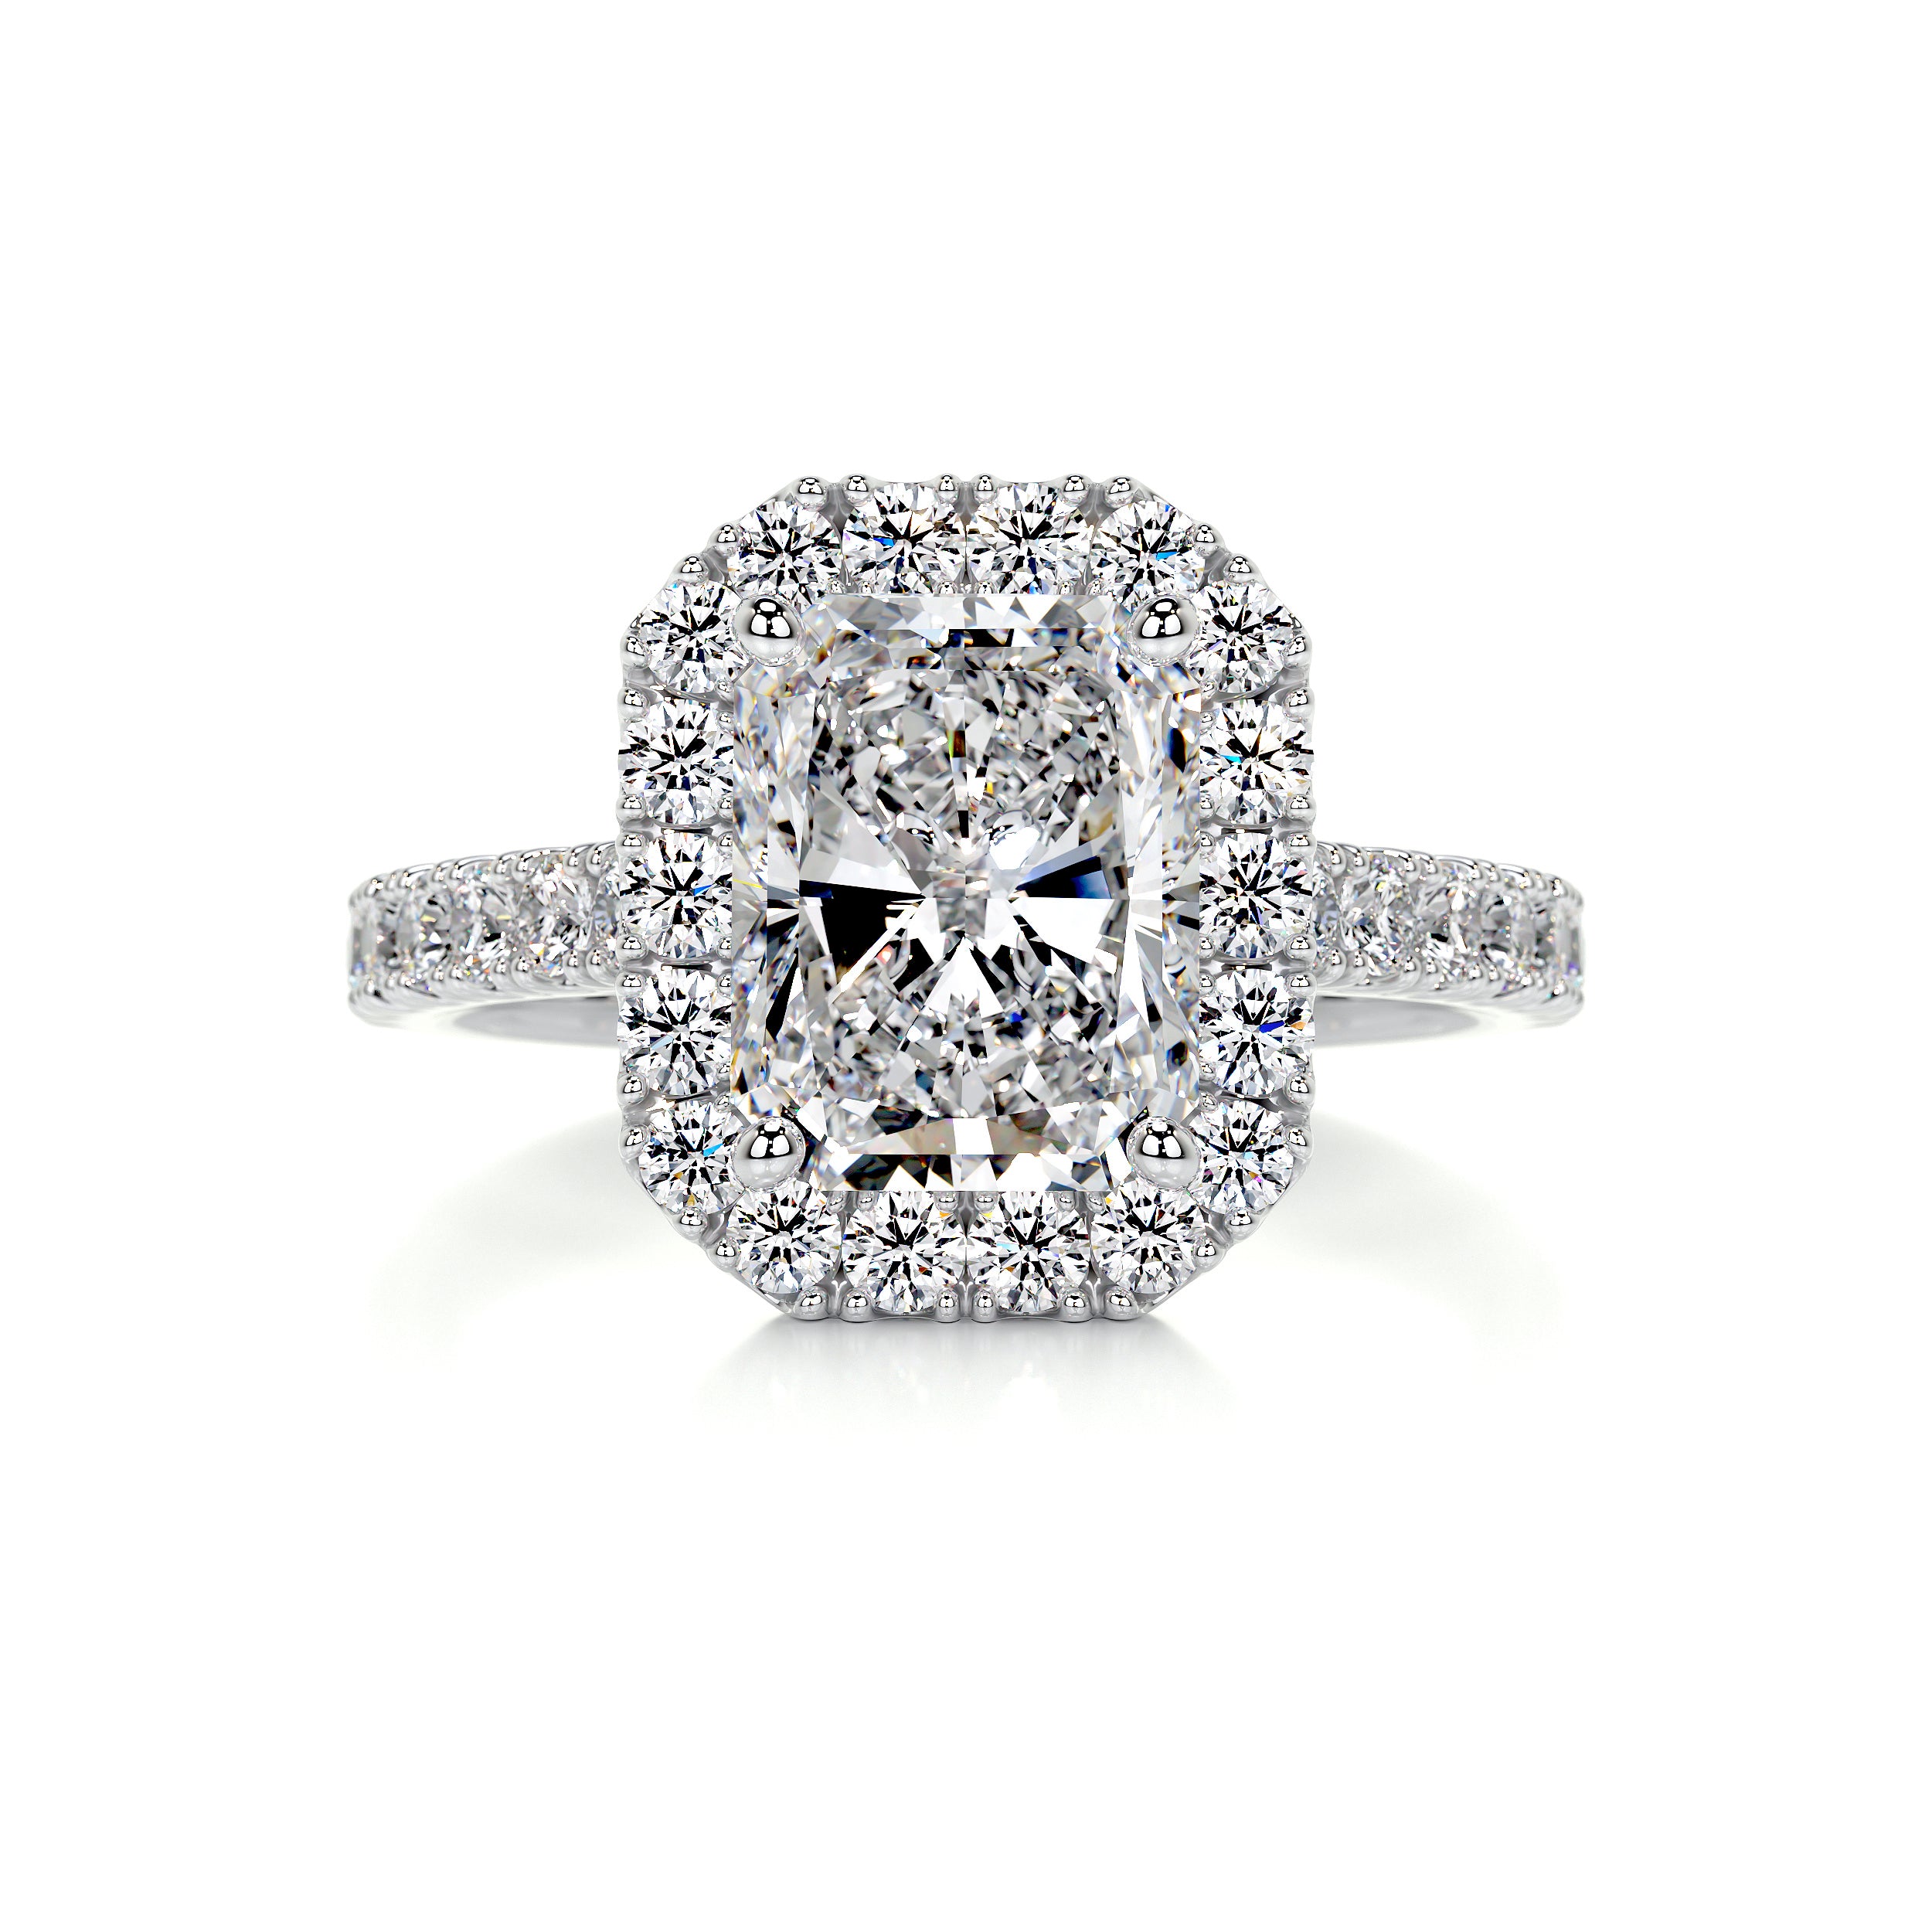 Andrea Diamond Engagement Ring   (2.5 Carat) -14K White Gold